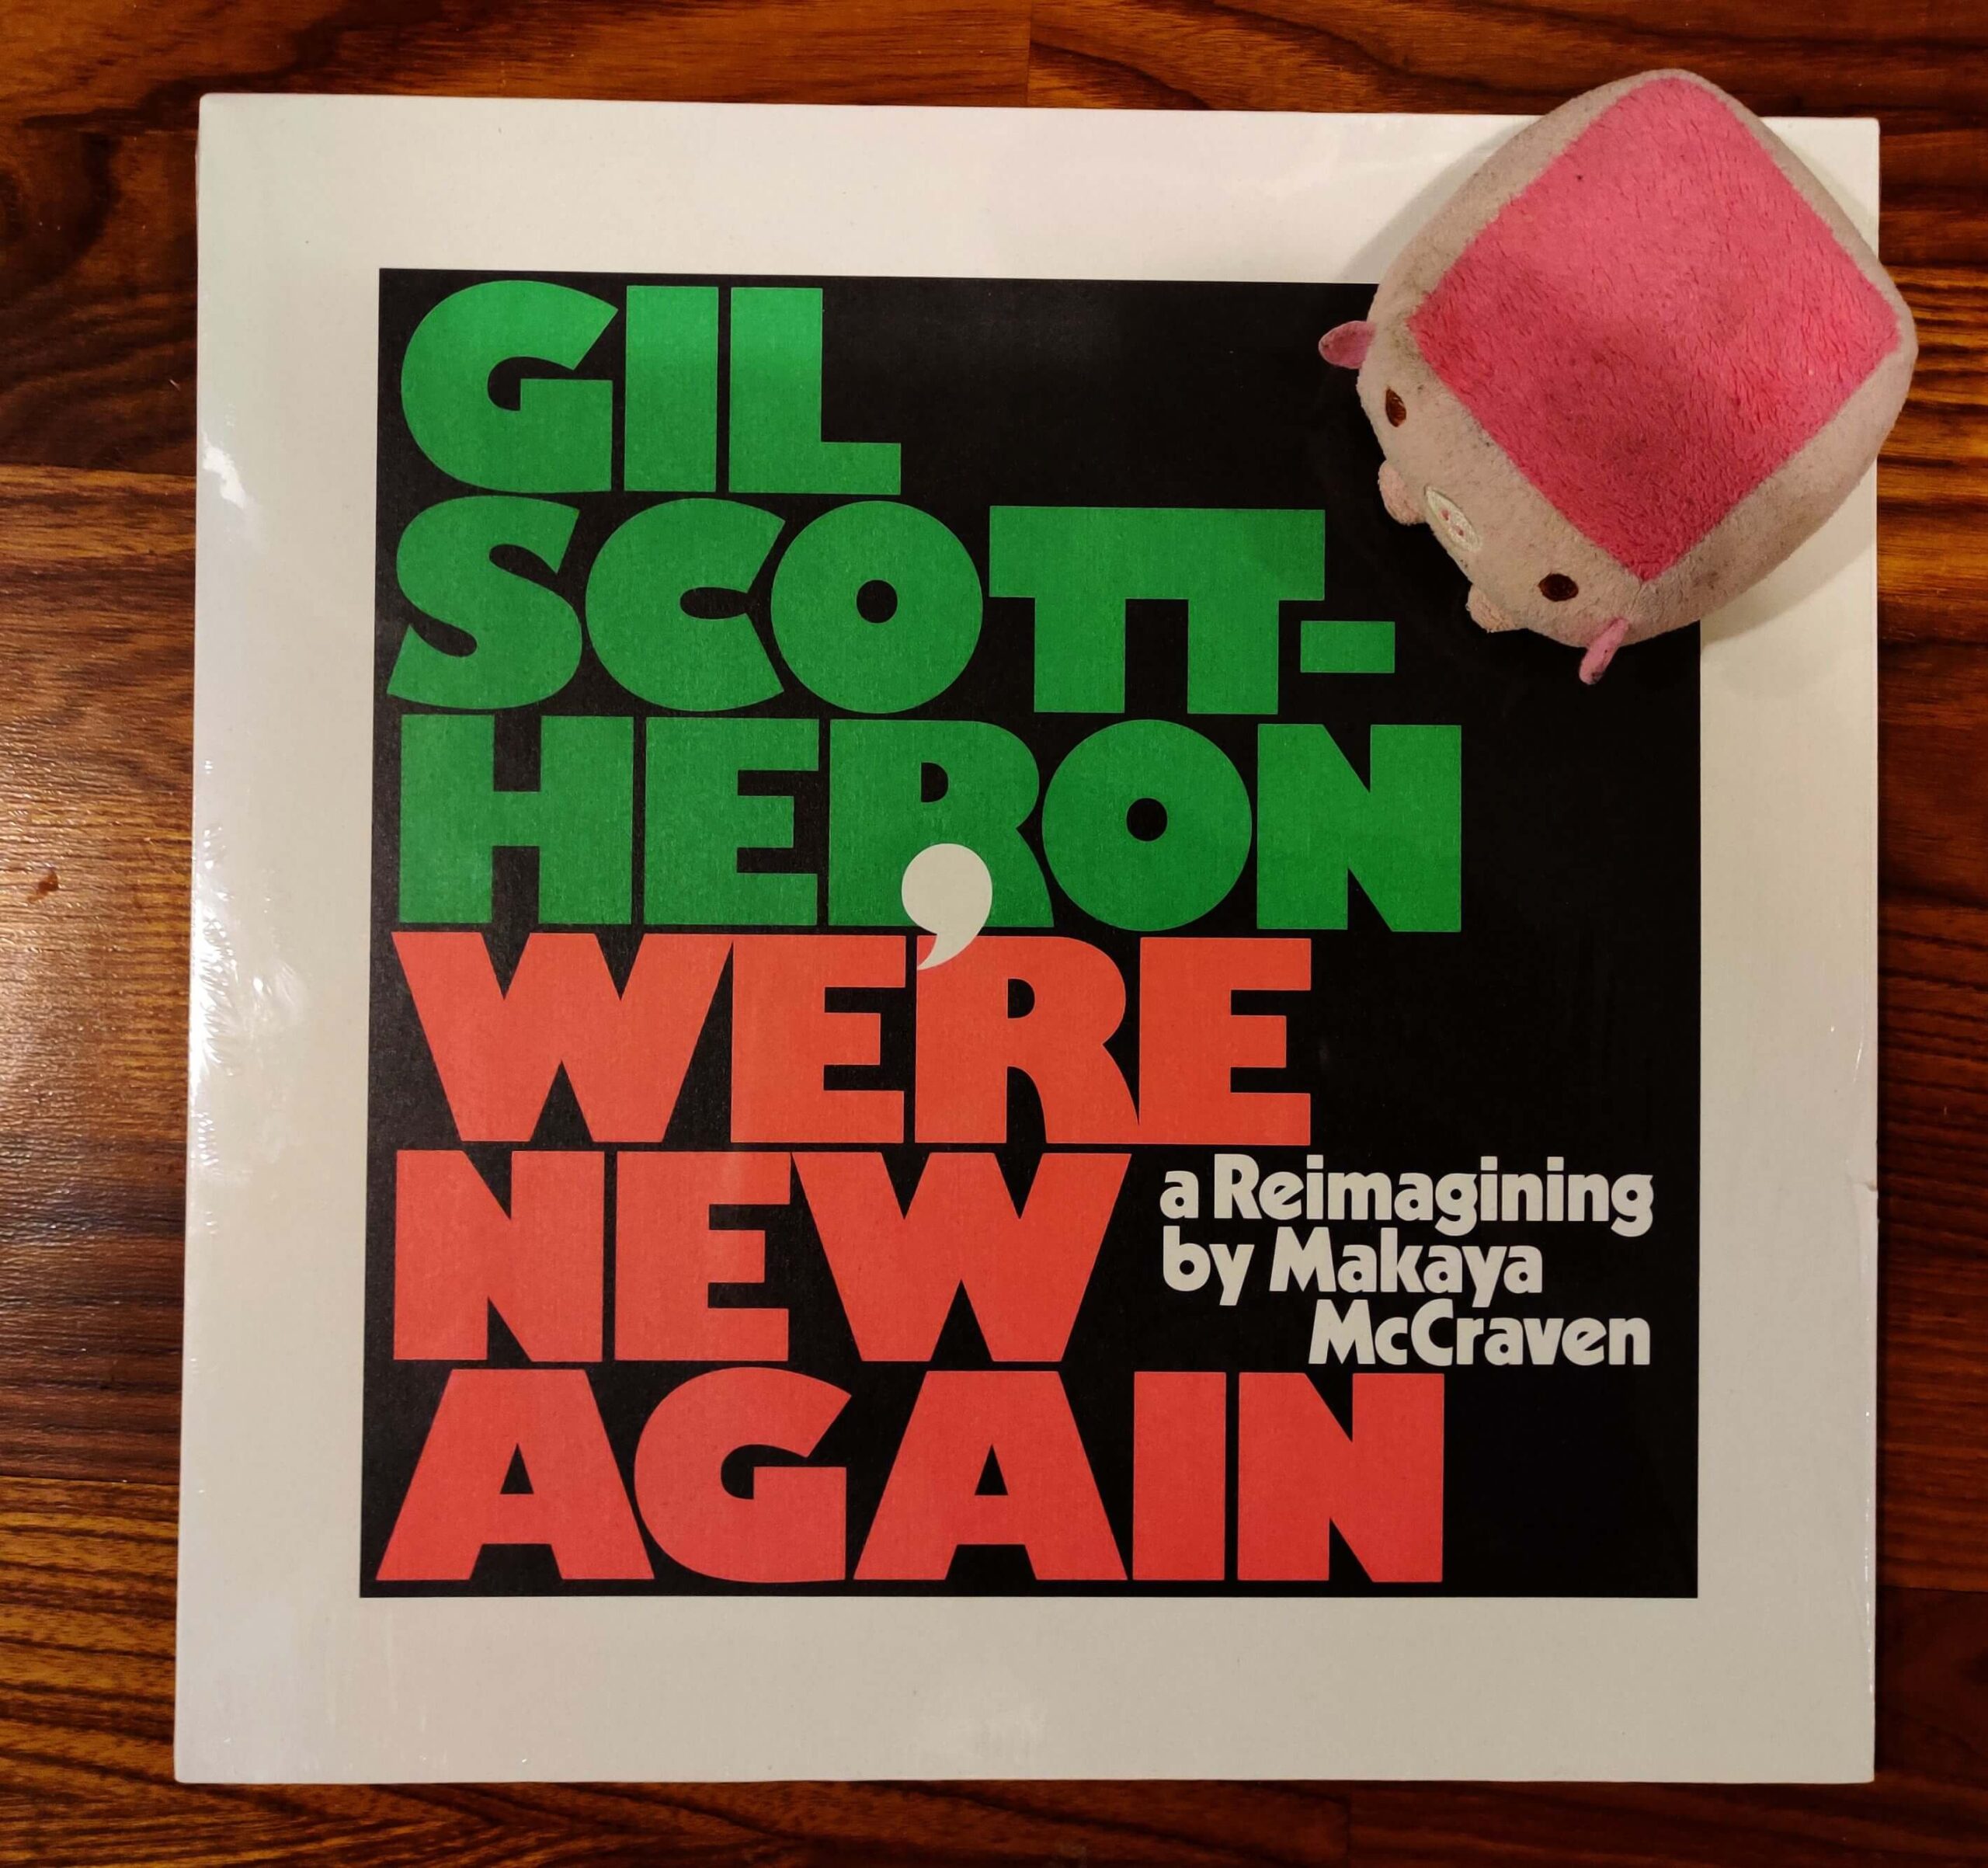 Gil Scott-Heron – We’re new again (A reimagining by Makaya McCraven)